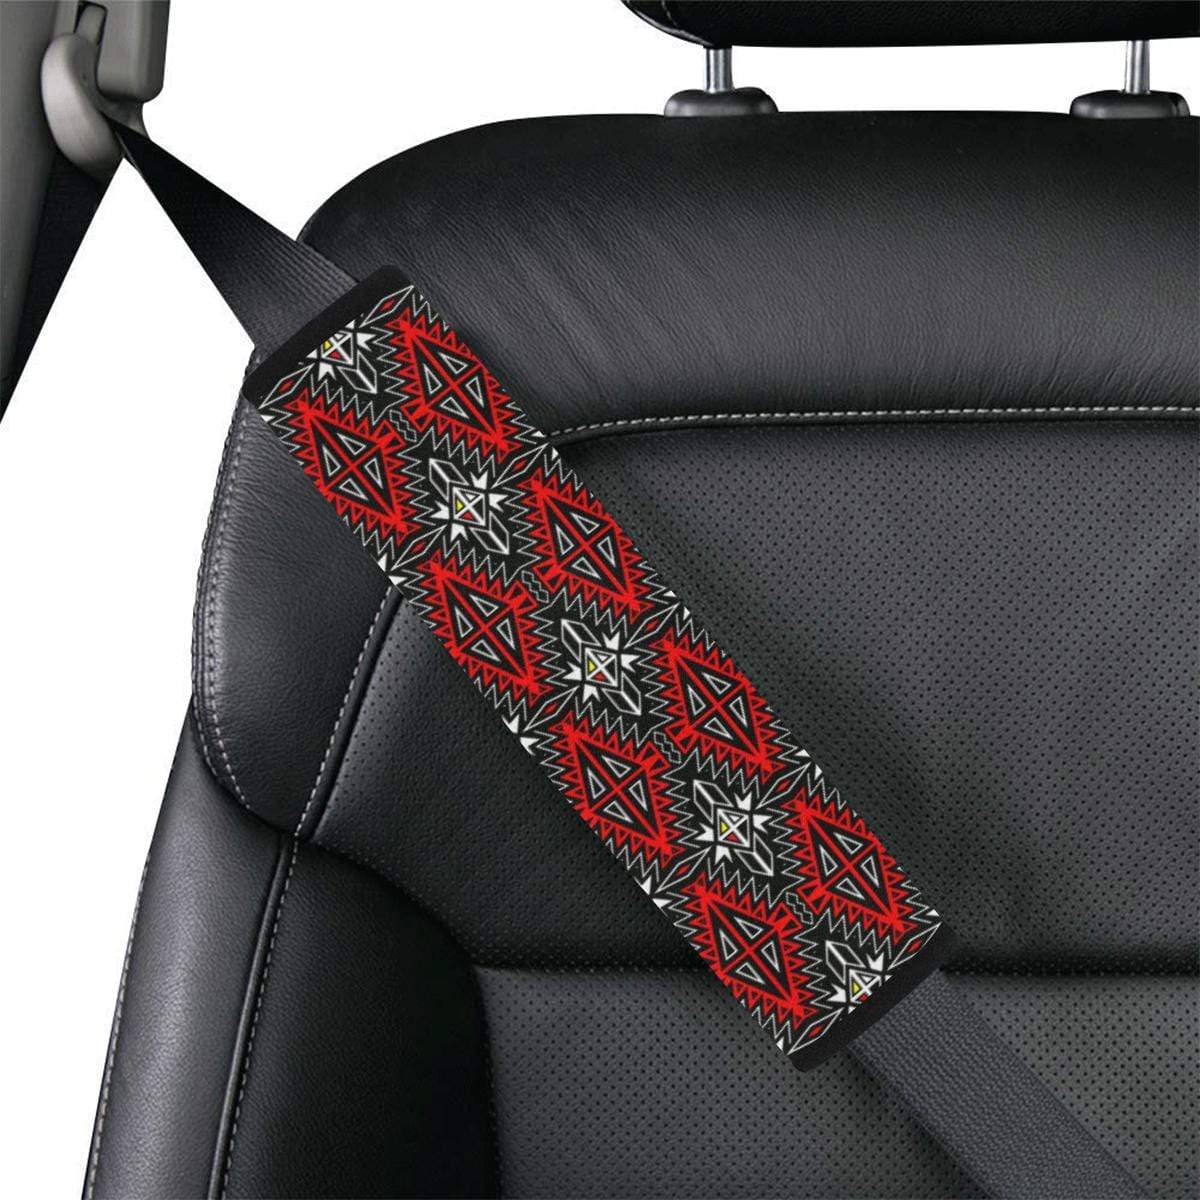 Four Directions Car Seat Belt Cover 7''x12.6'' Car Seat Belt Cover 7''x12.6'' e-joyer 